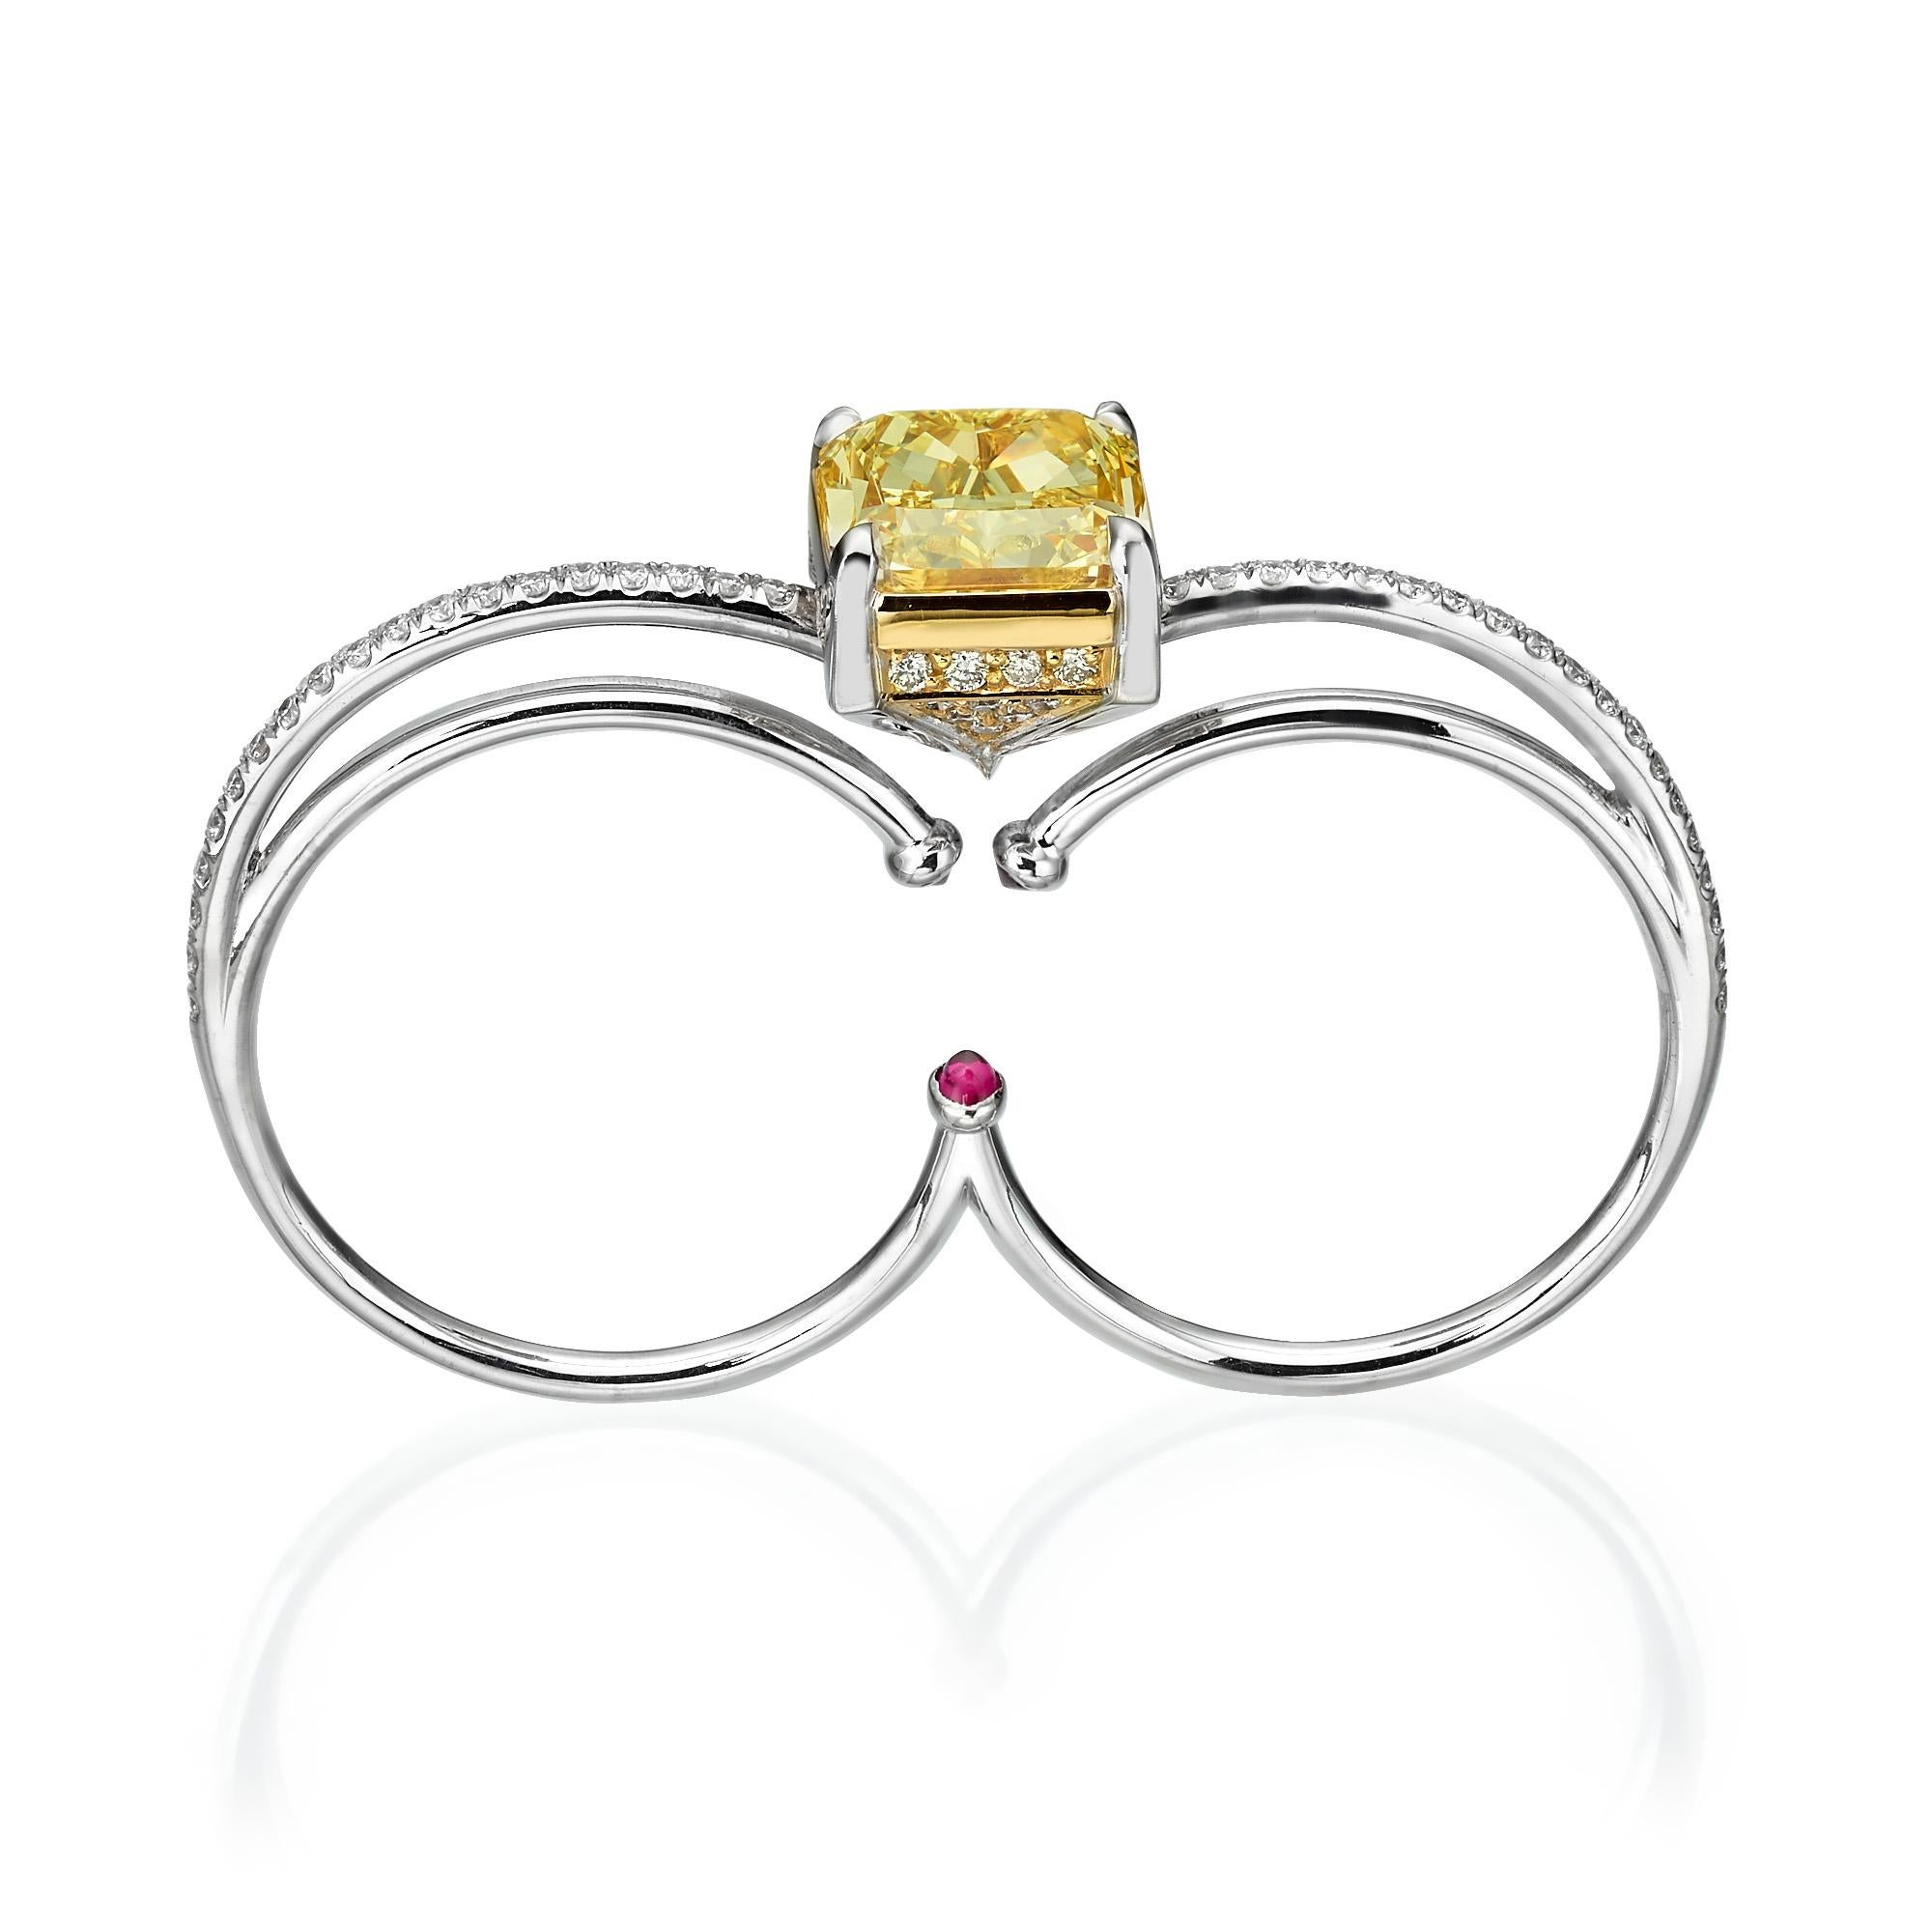 3.5 carat radiant cut diamond ring